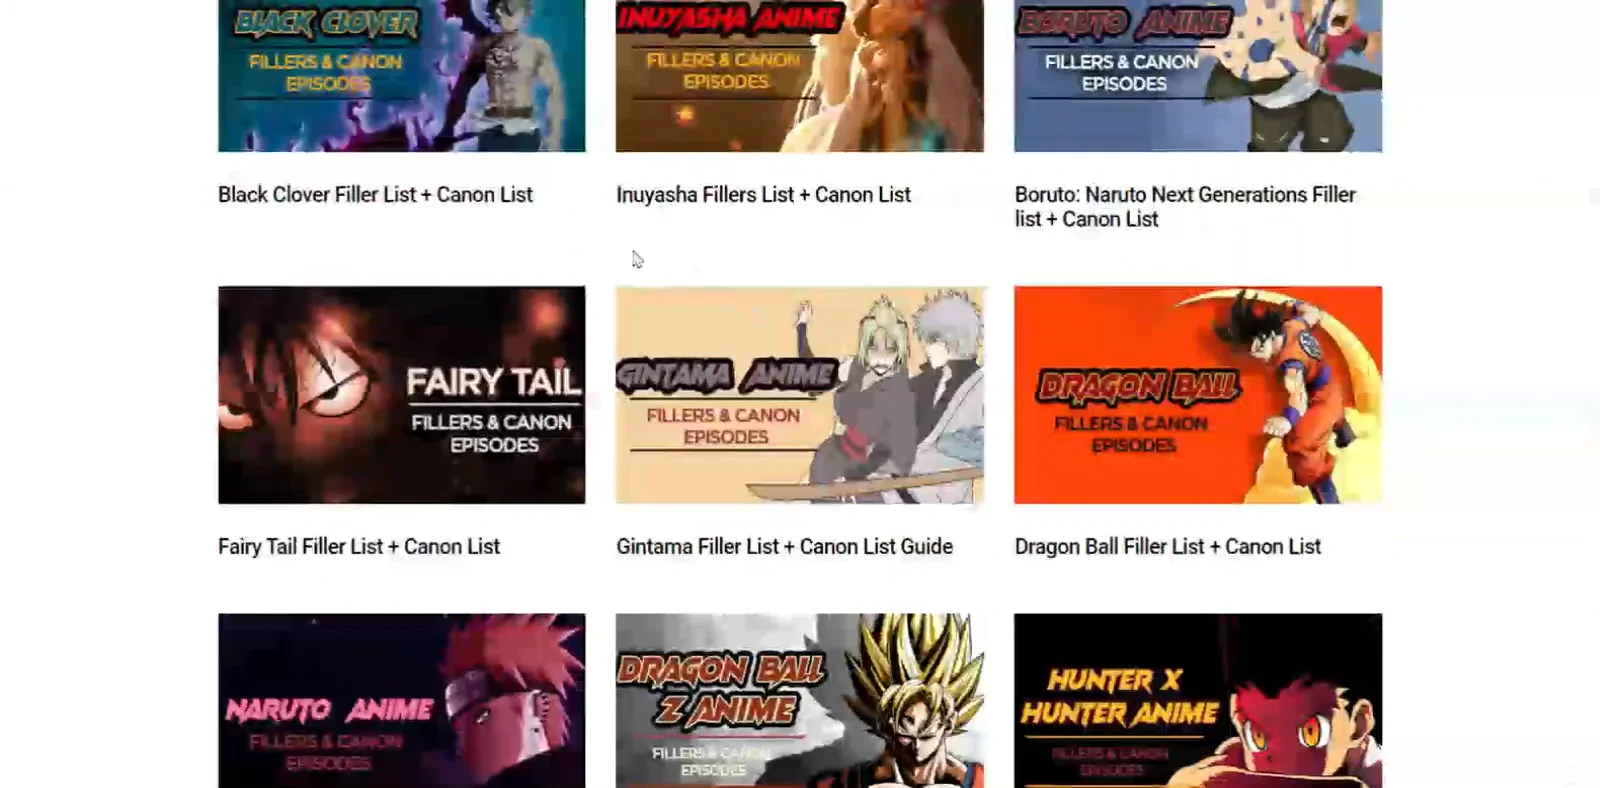 Boruto: Naruto Next Generations Filler list + Canon List